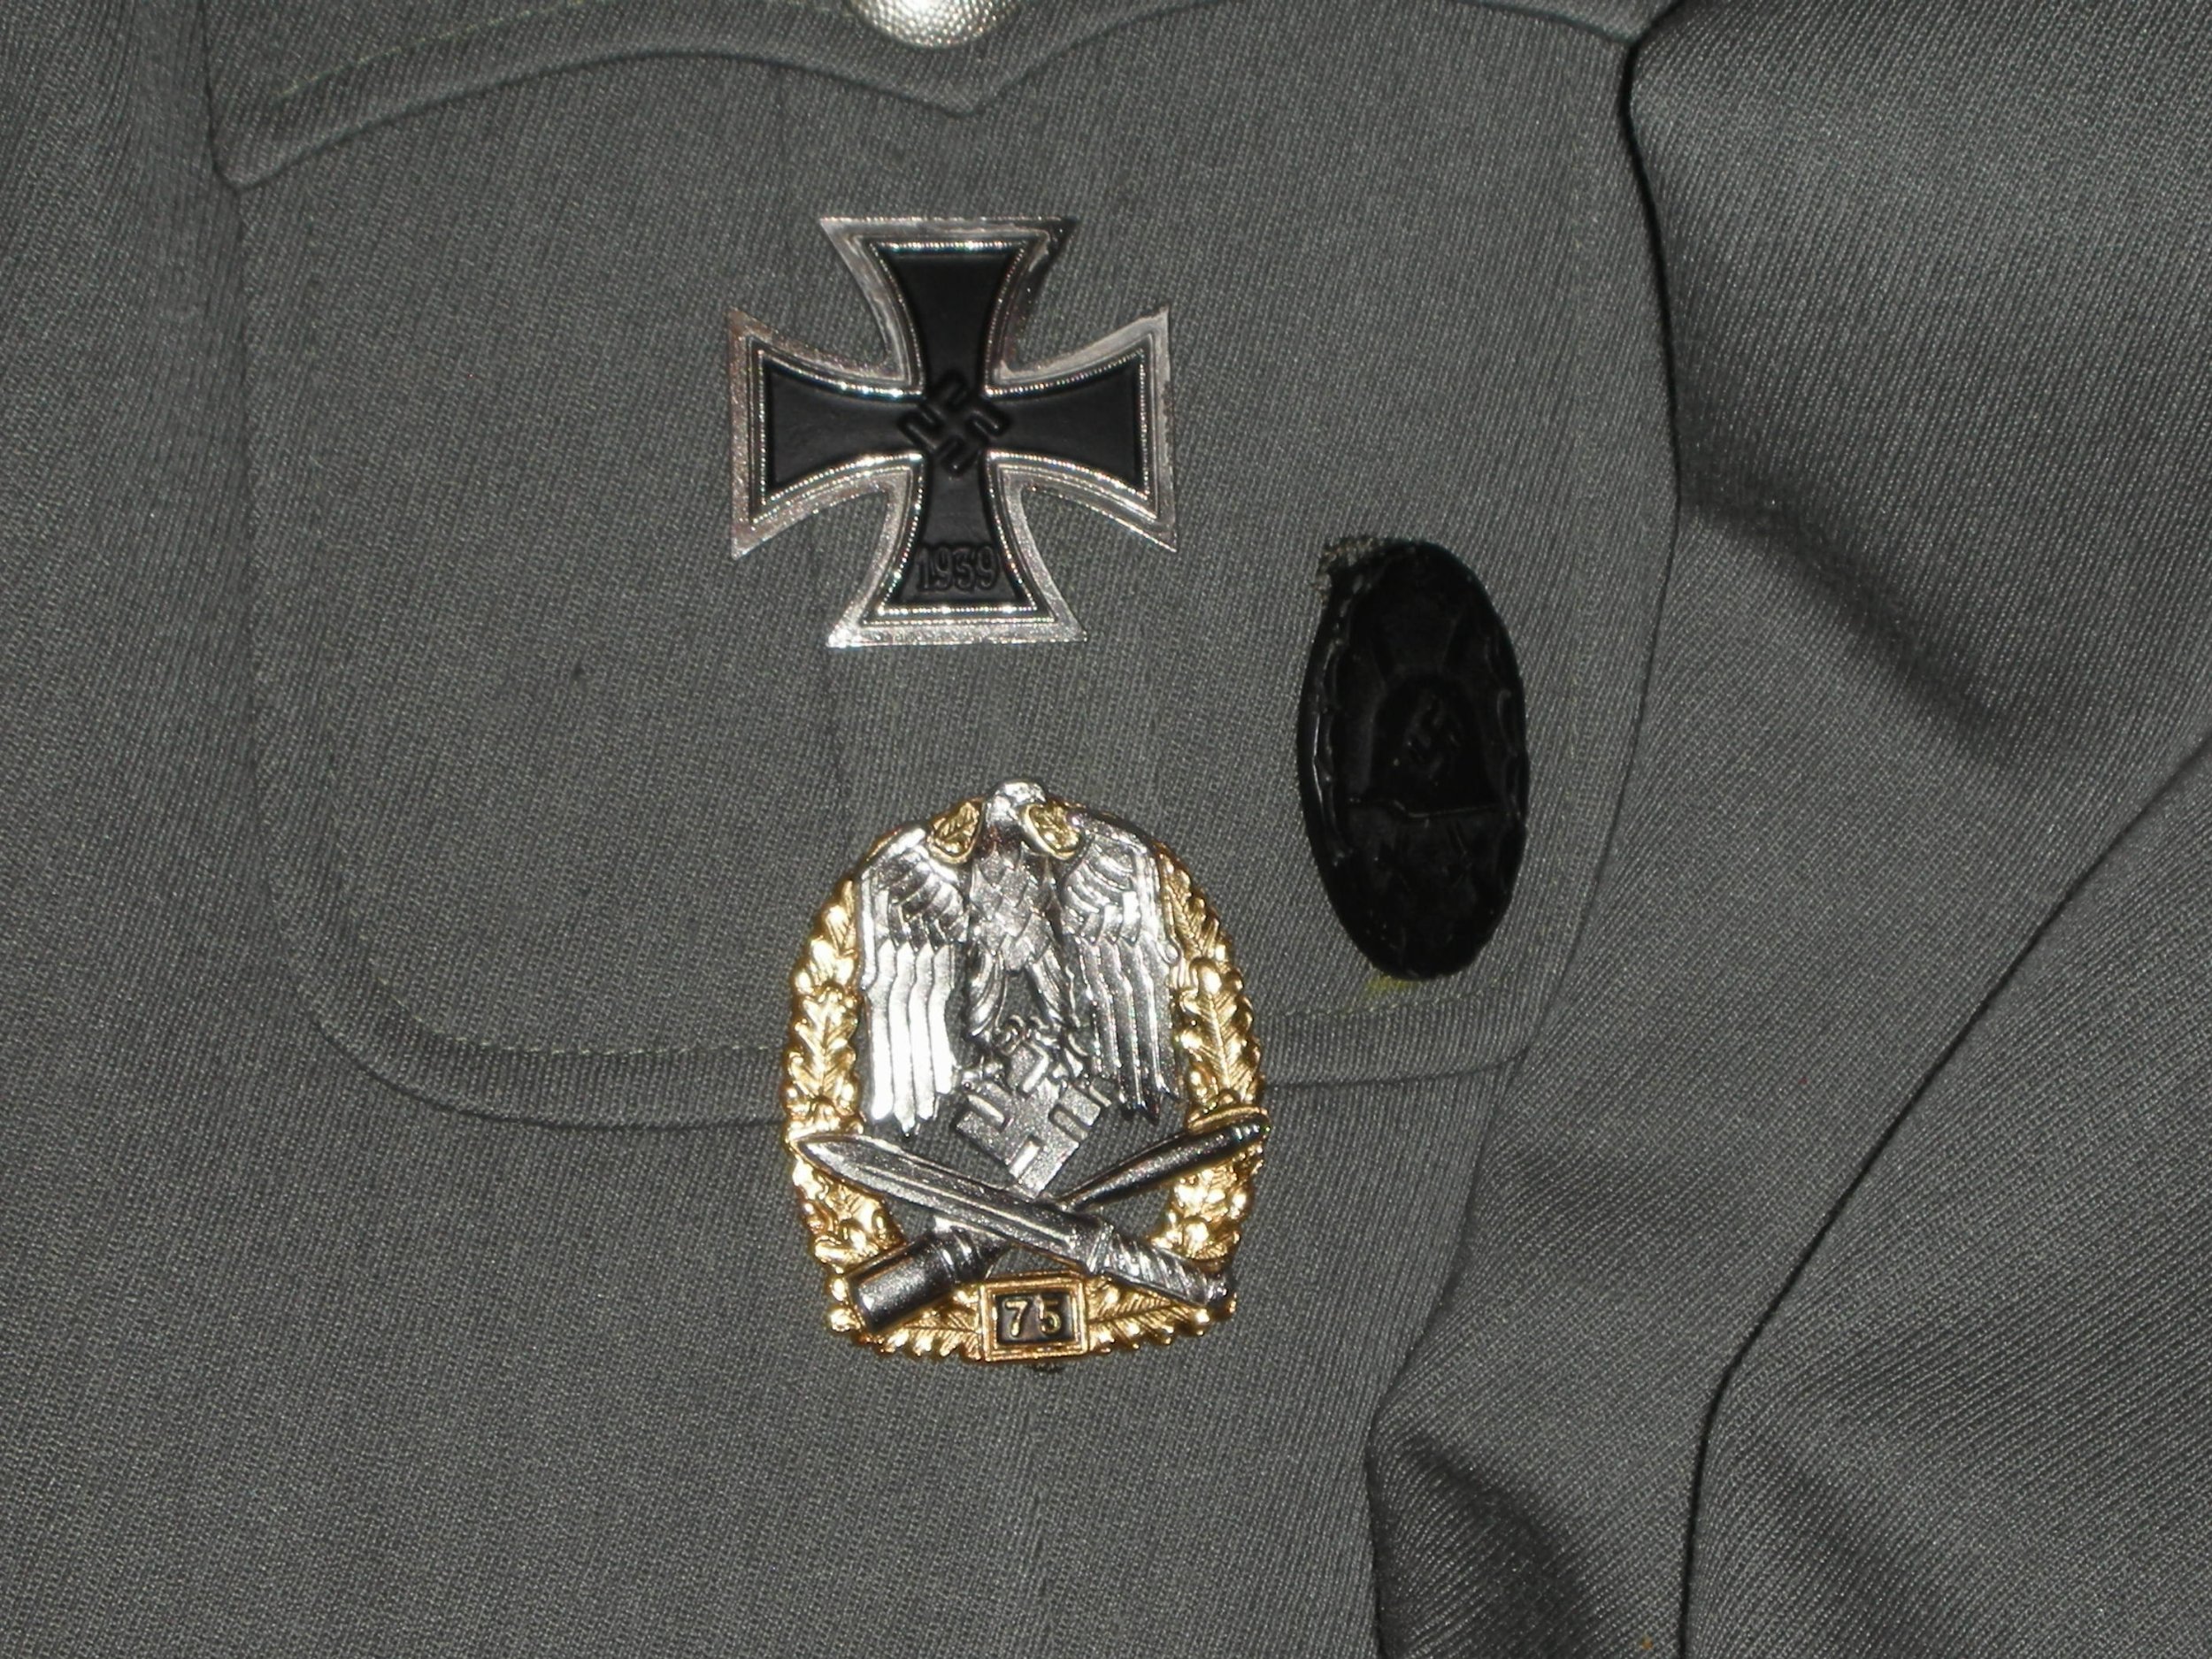 SS. Germania Div. Officer Dress Uniform (11).JPG